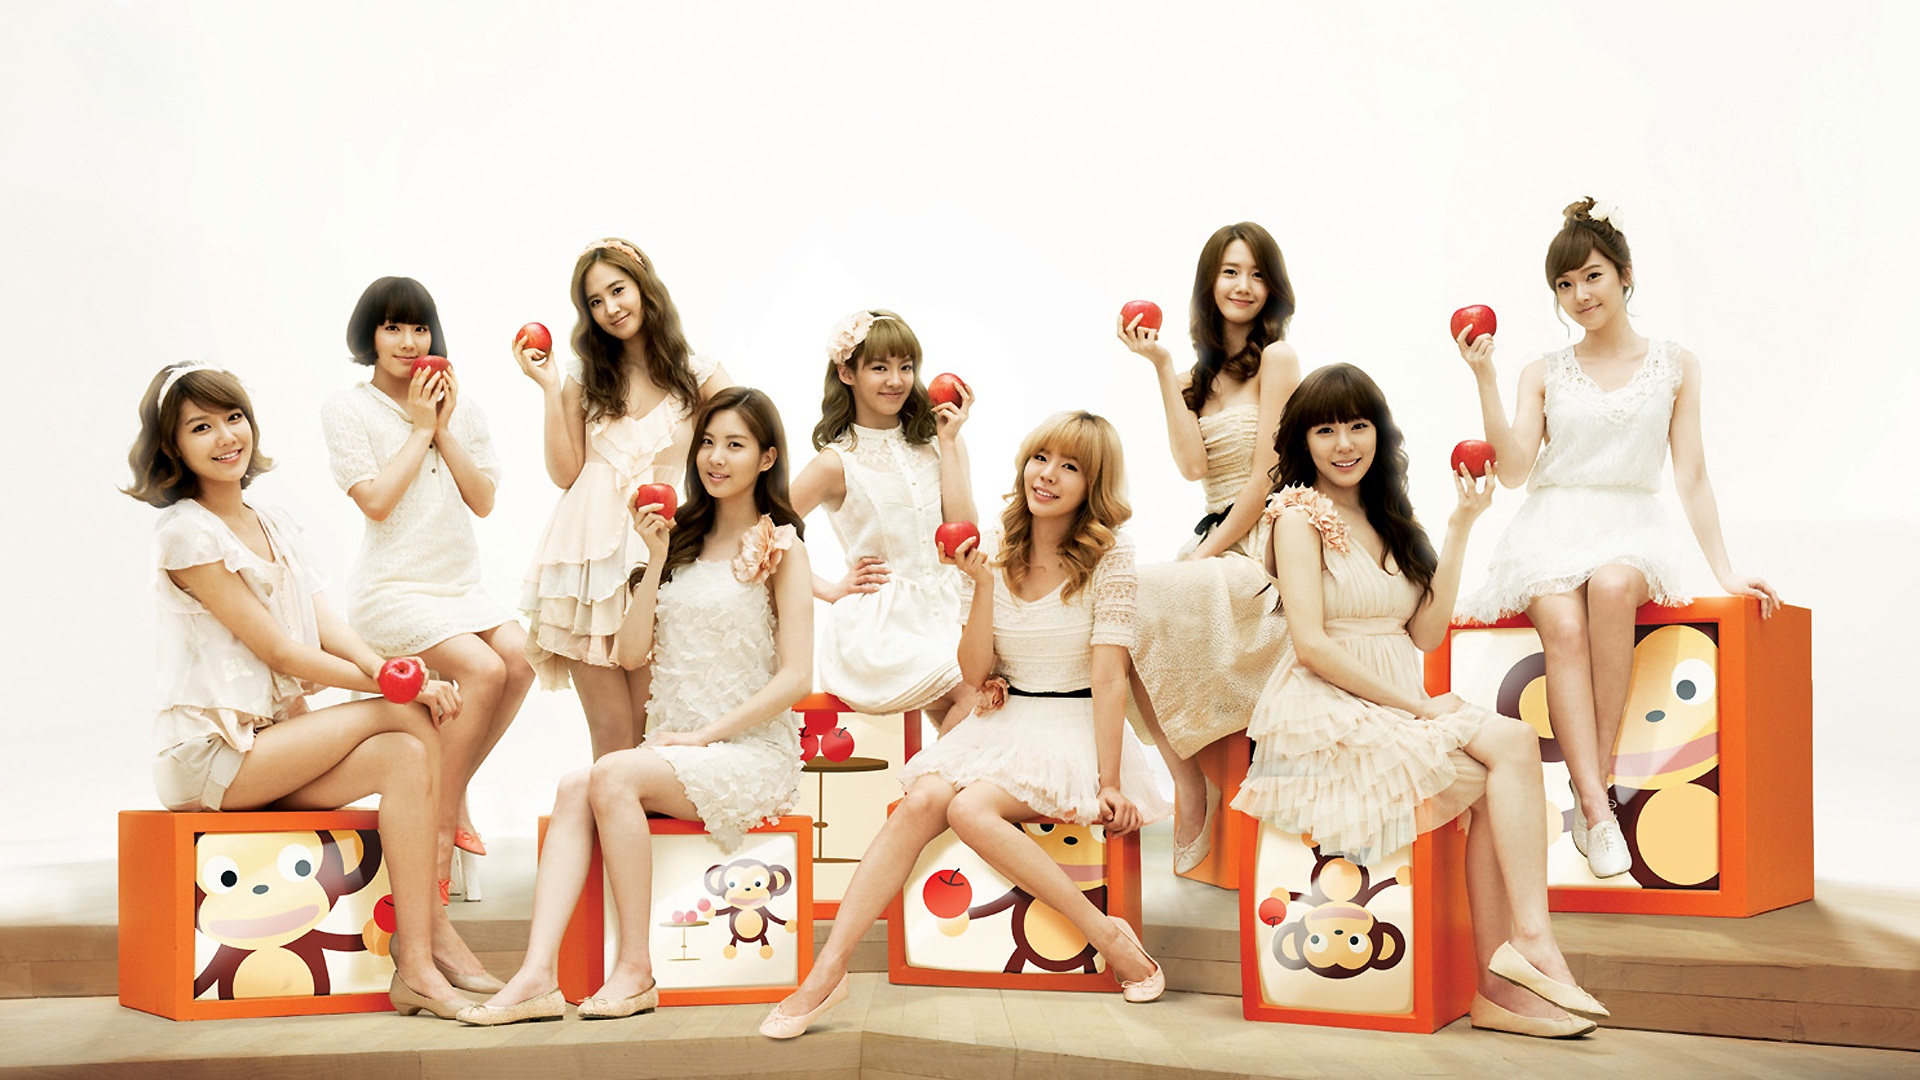 Girls Generation neuesten HD Wallpapers Collection #16 - 1920x1080